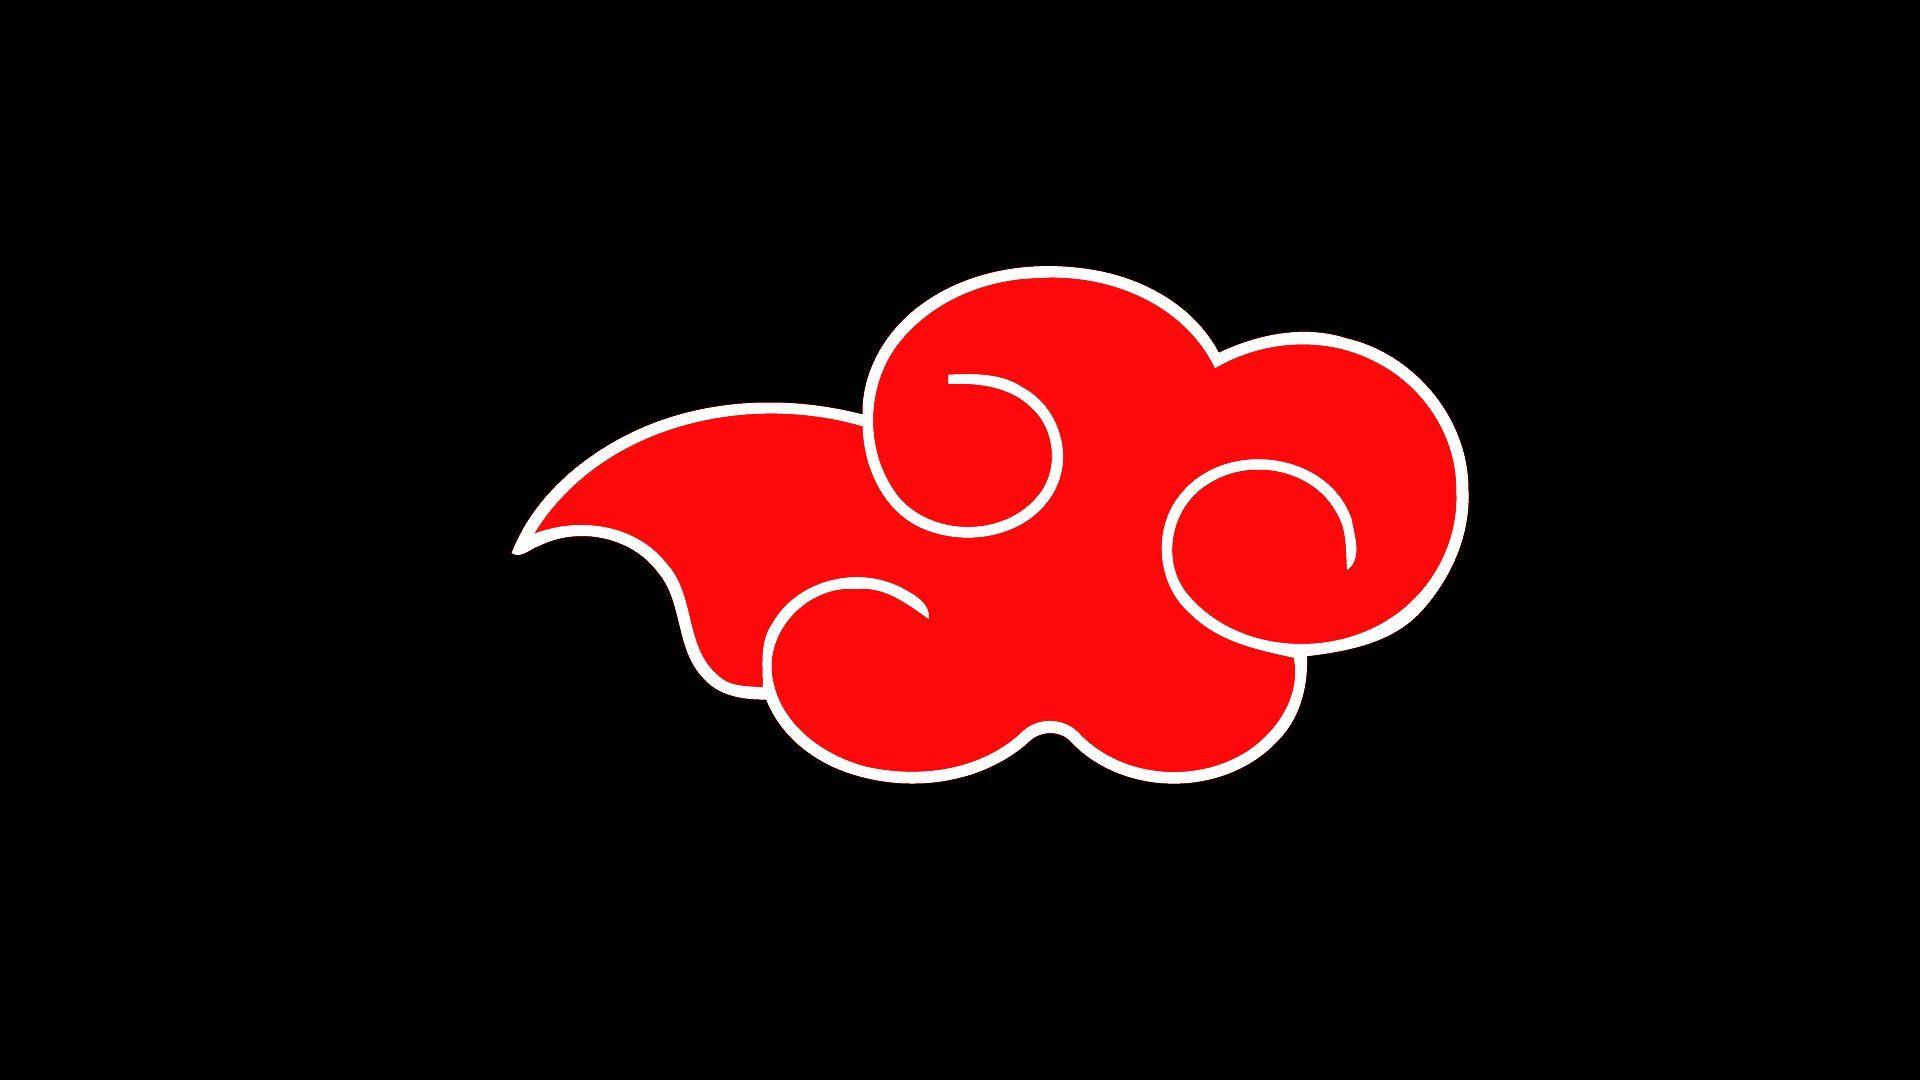 Akatsuki Symbol Wallpapers - Top Free Akatsuki Symbol Backgrounds - WallpaperAccess